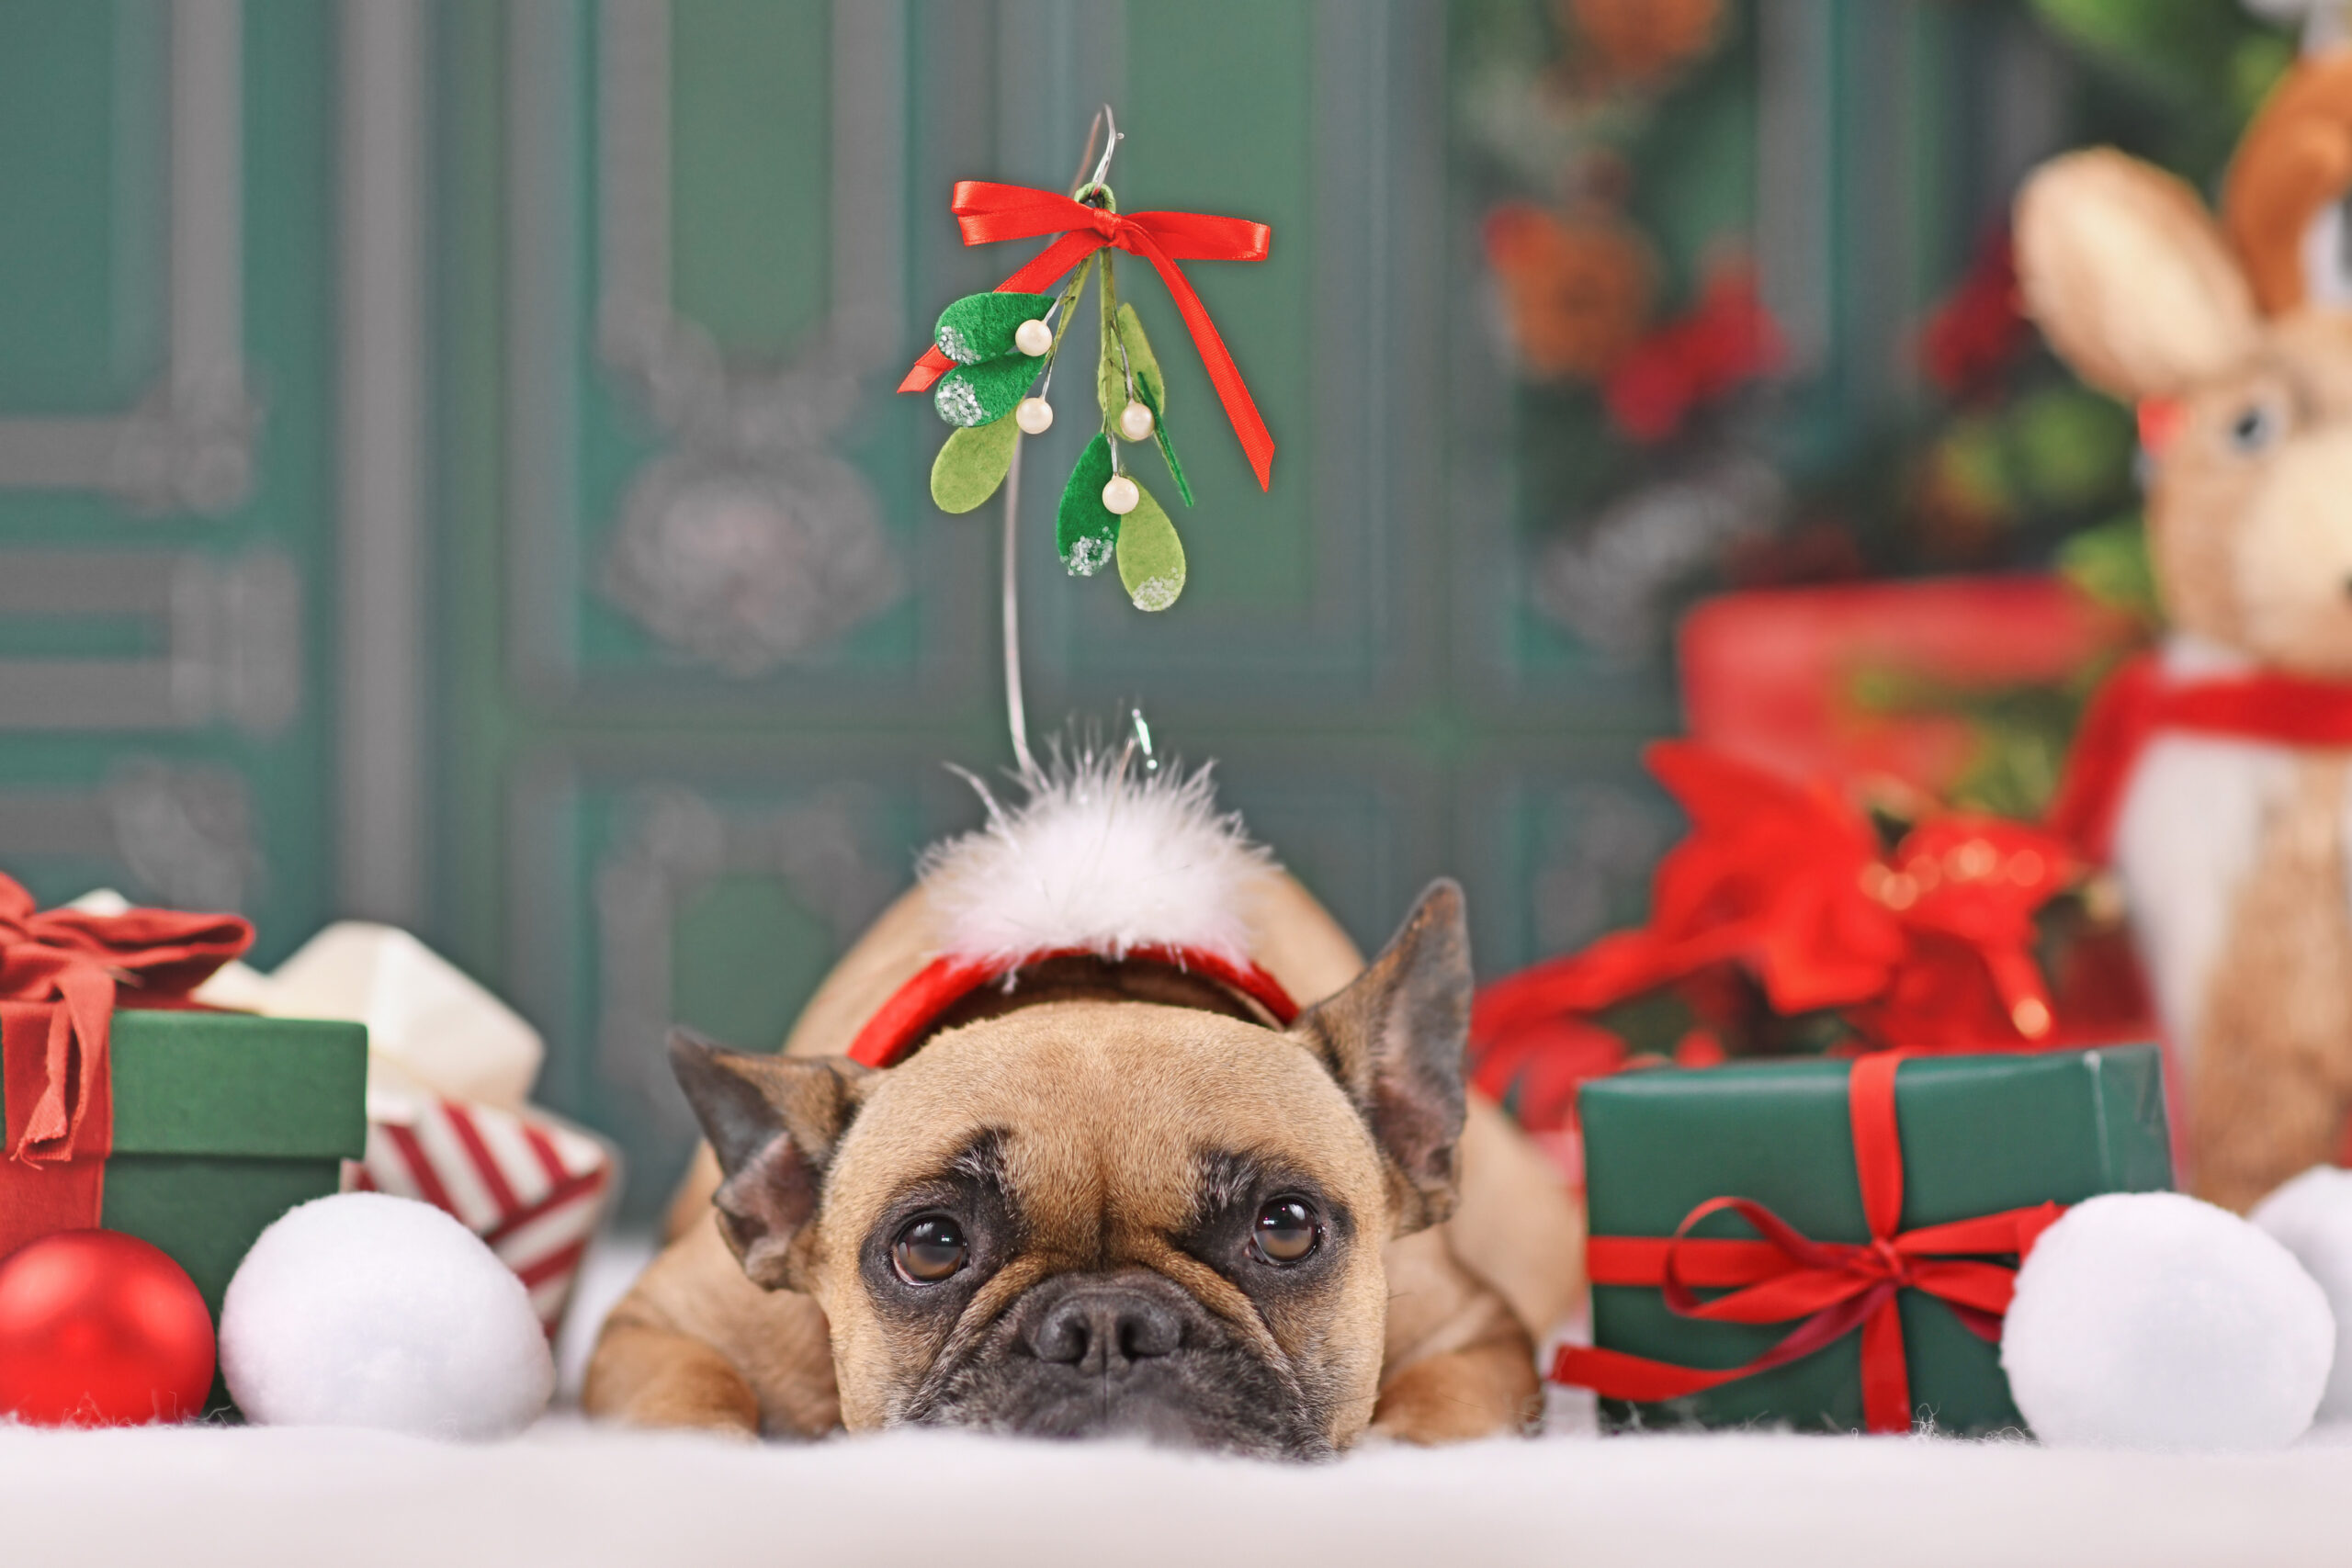 French Bulldog dog wearing Christmas mistletoe headband between festive decoration